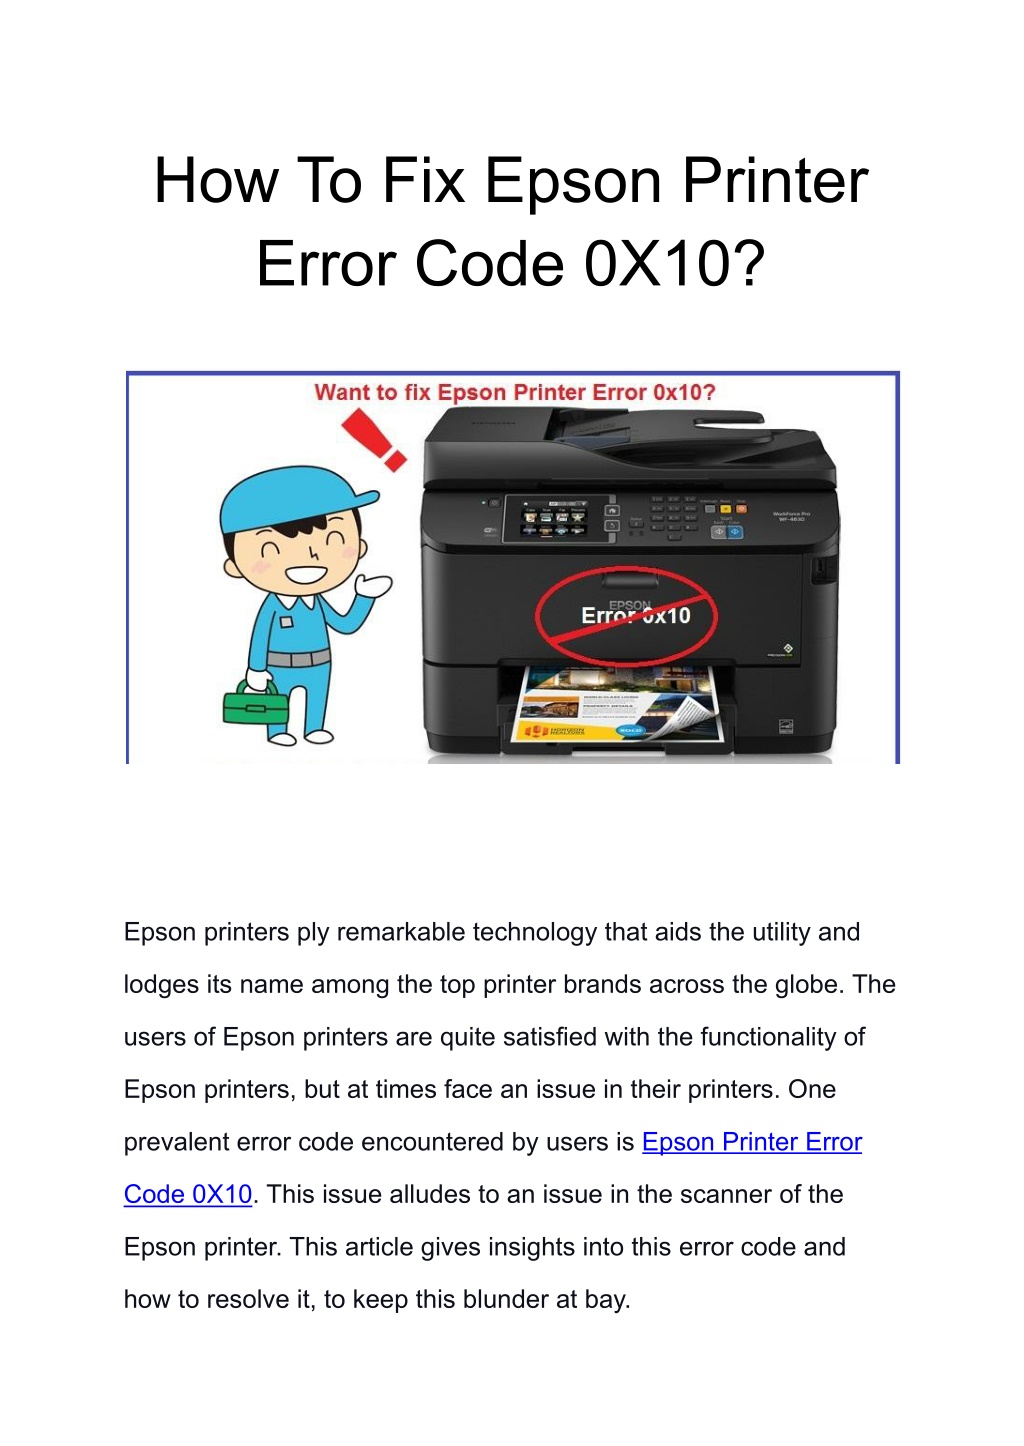 Ppt How To Fix Epson Printer Error Code 0x10 New Powerpoint Presentation Id10447215 3411